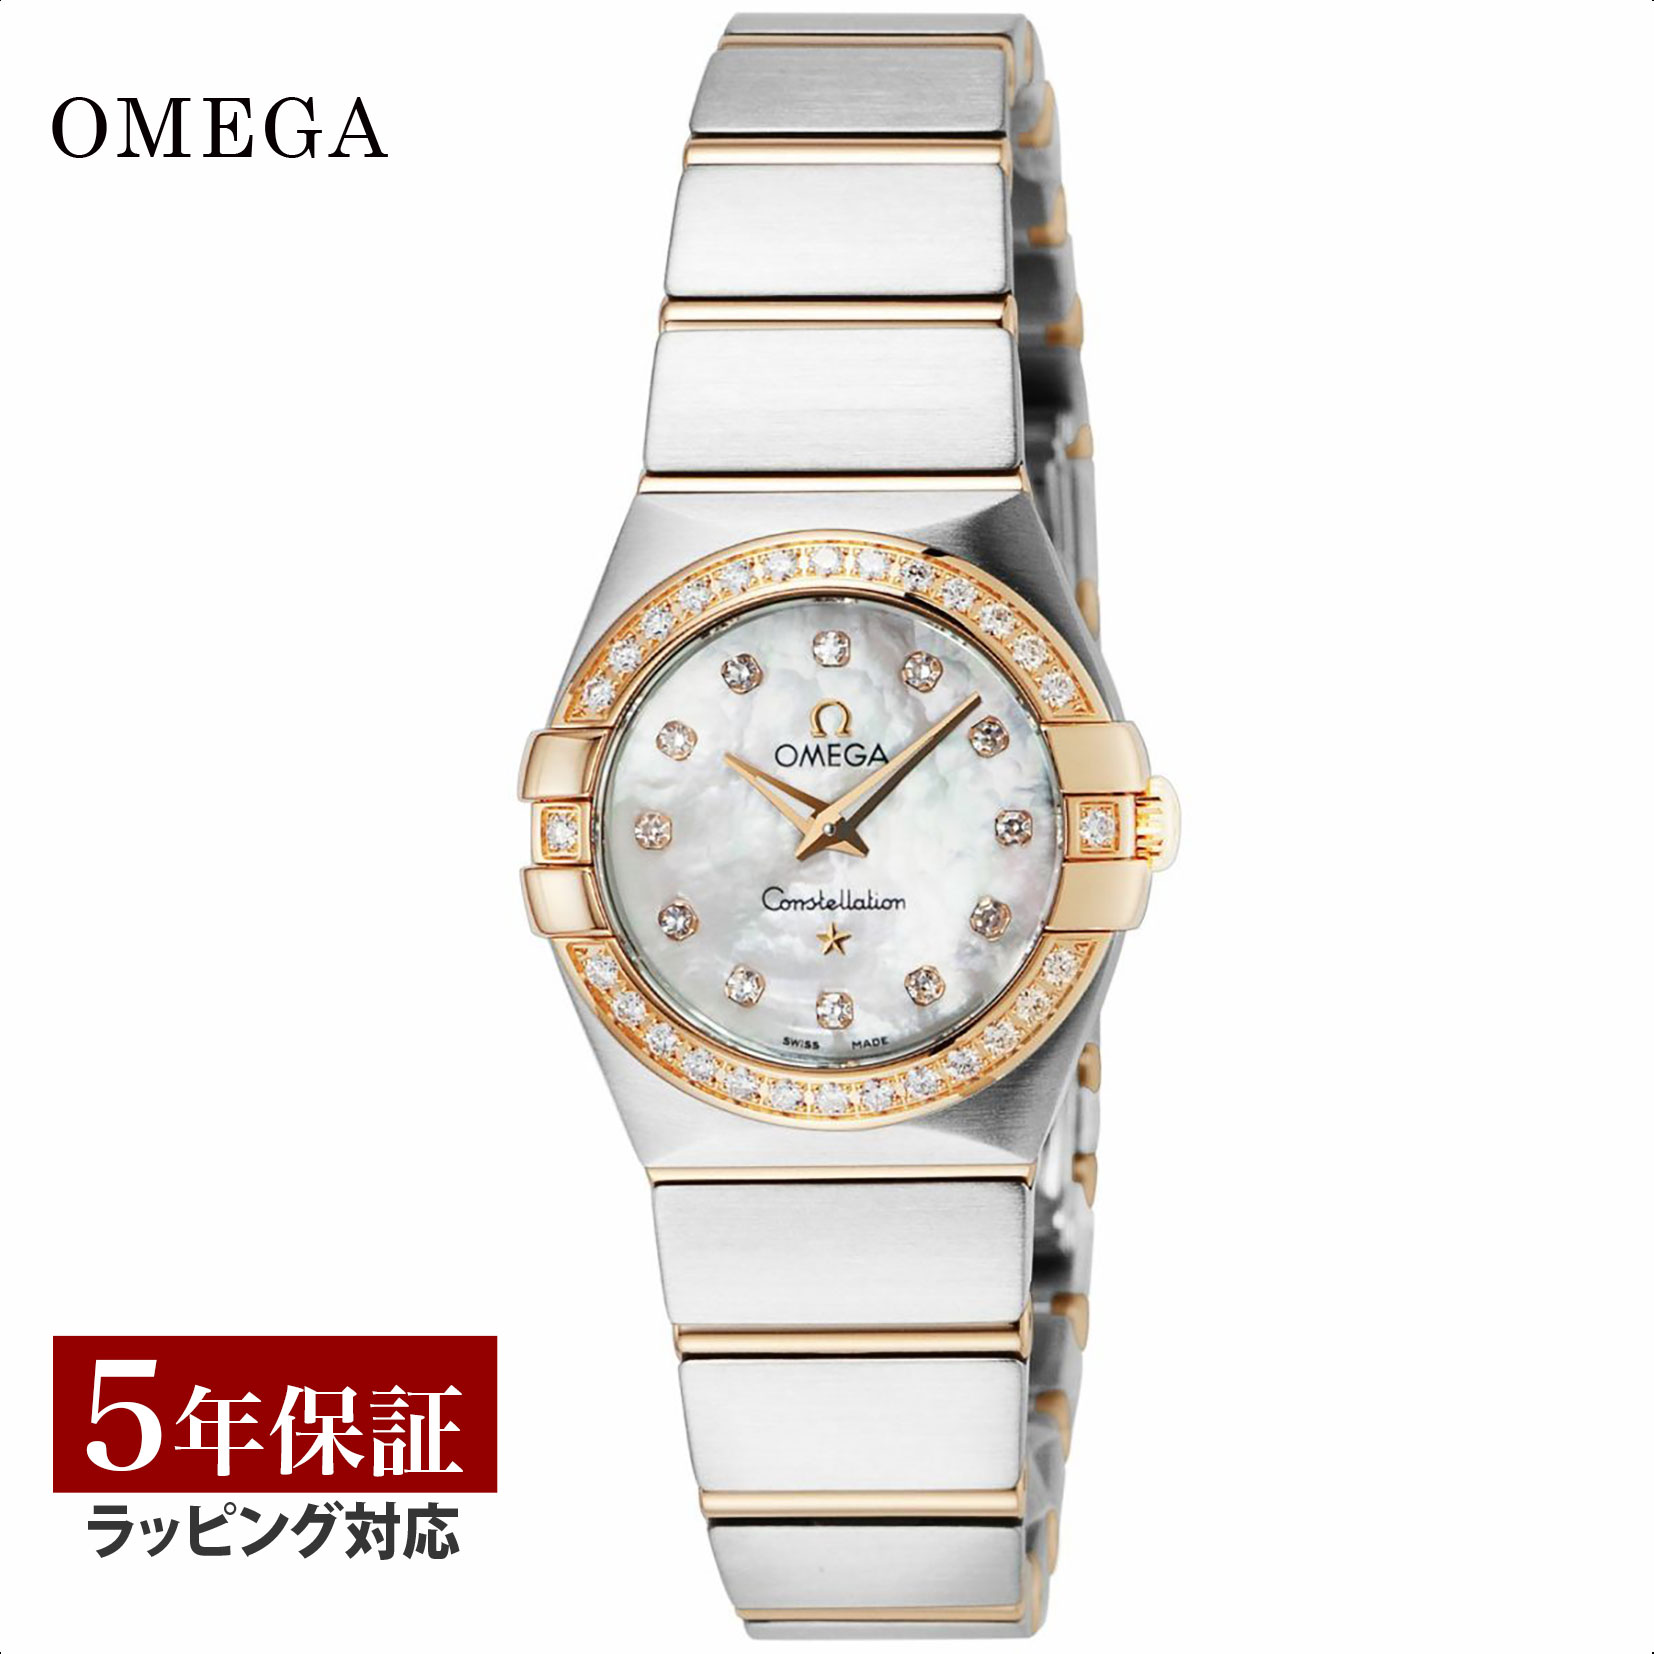 OMEGA オメガ コンステレーション クォーツ レディース ホワイトパール 123.25.24.60.55.001 時計 腕時計 高級腕時計 ブランド